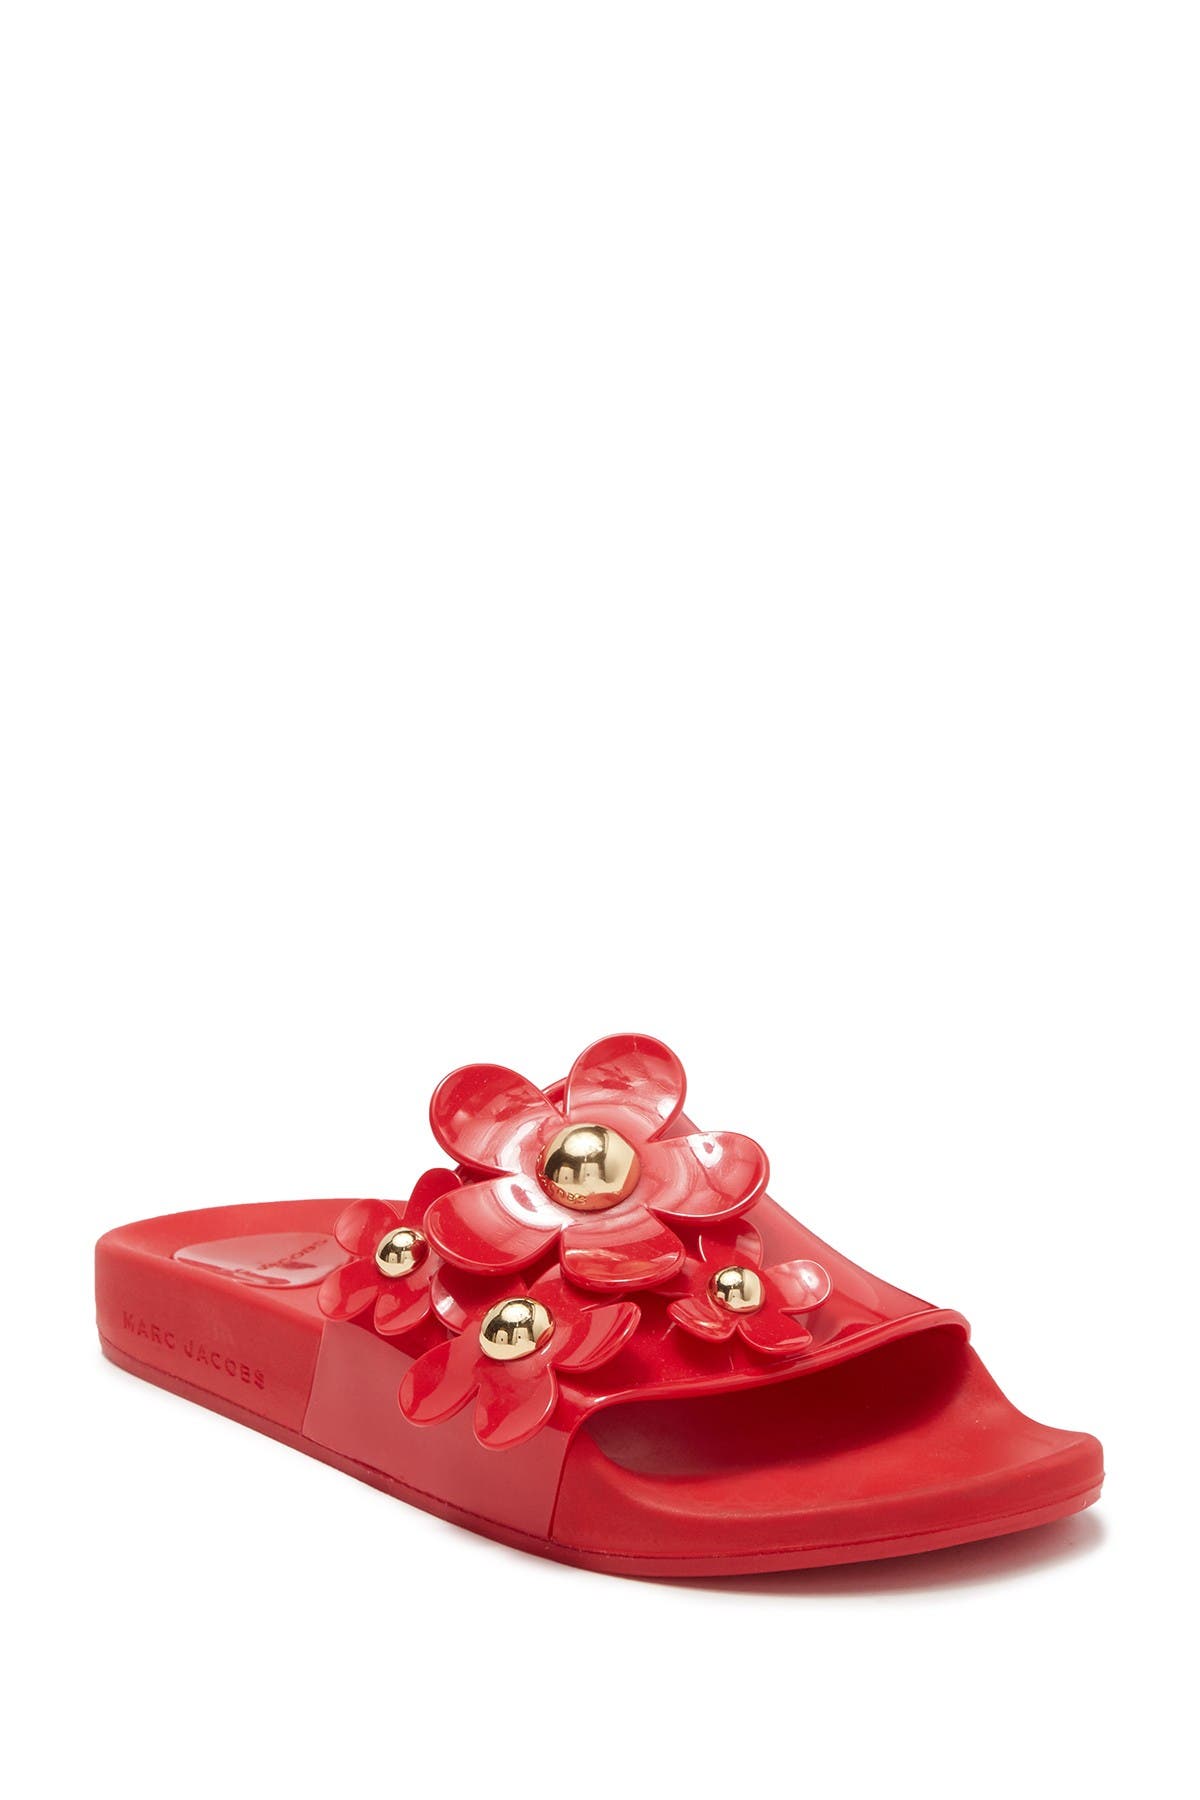 Marc Jacobs Daisy Aqua Slide Sandal In Red